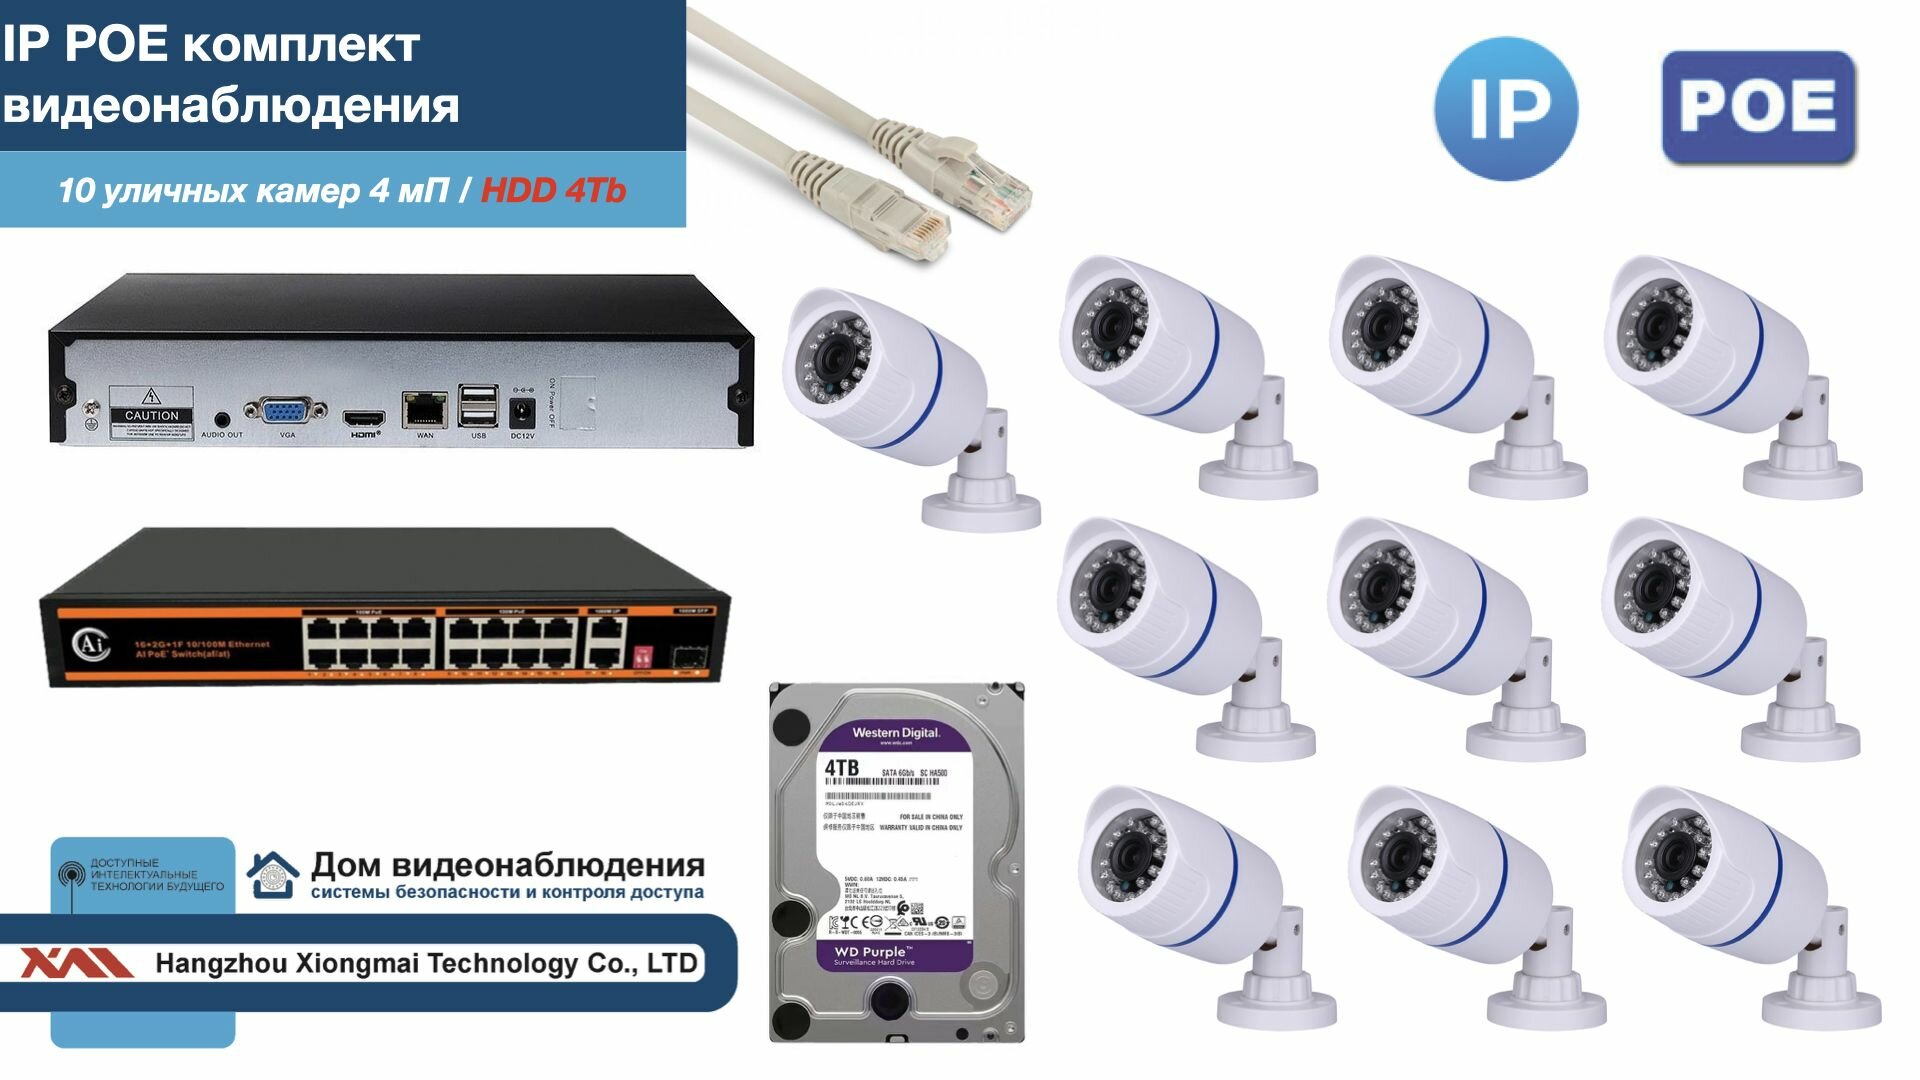 Полный IP POE комплект видеонаблюдения на 10 камер (KIT10IPPOE100W4MP-HDD4Tb)